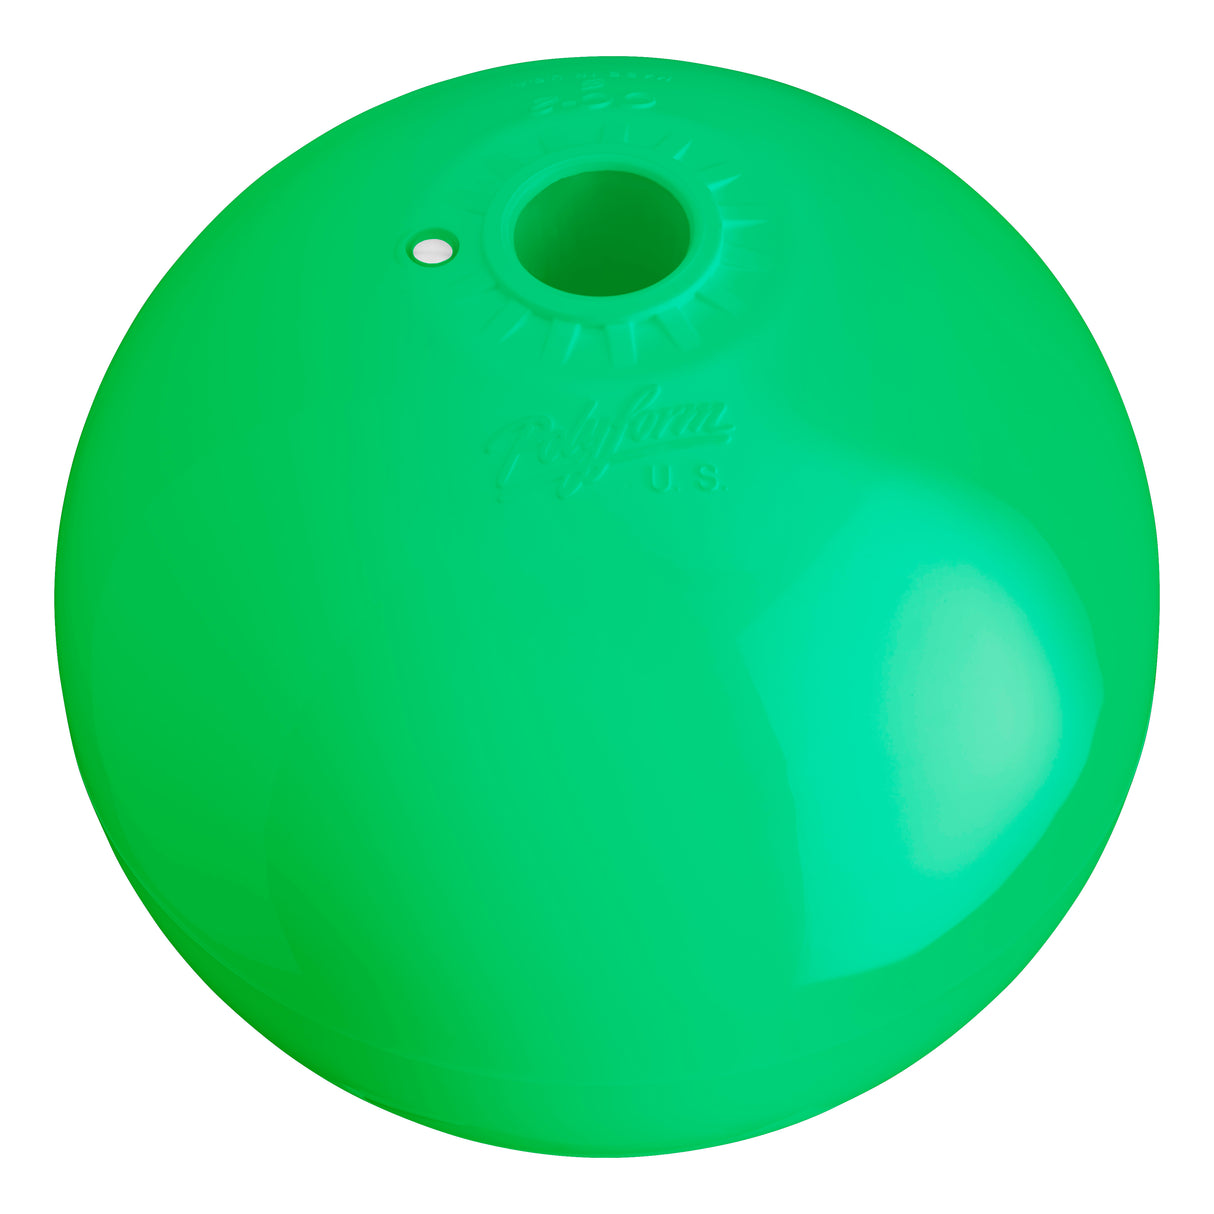 Hole through center mooring and marker buoy, Polyform CC-2 Green angled shot